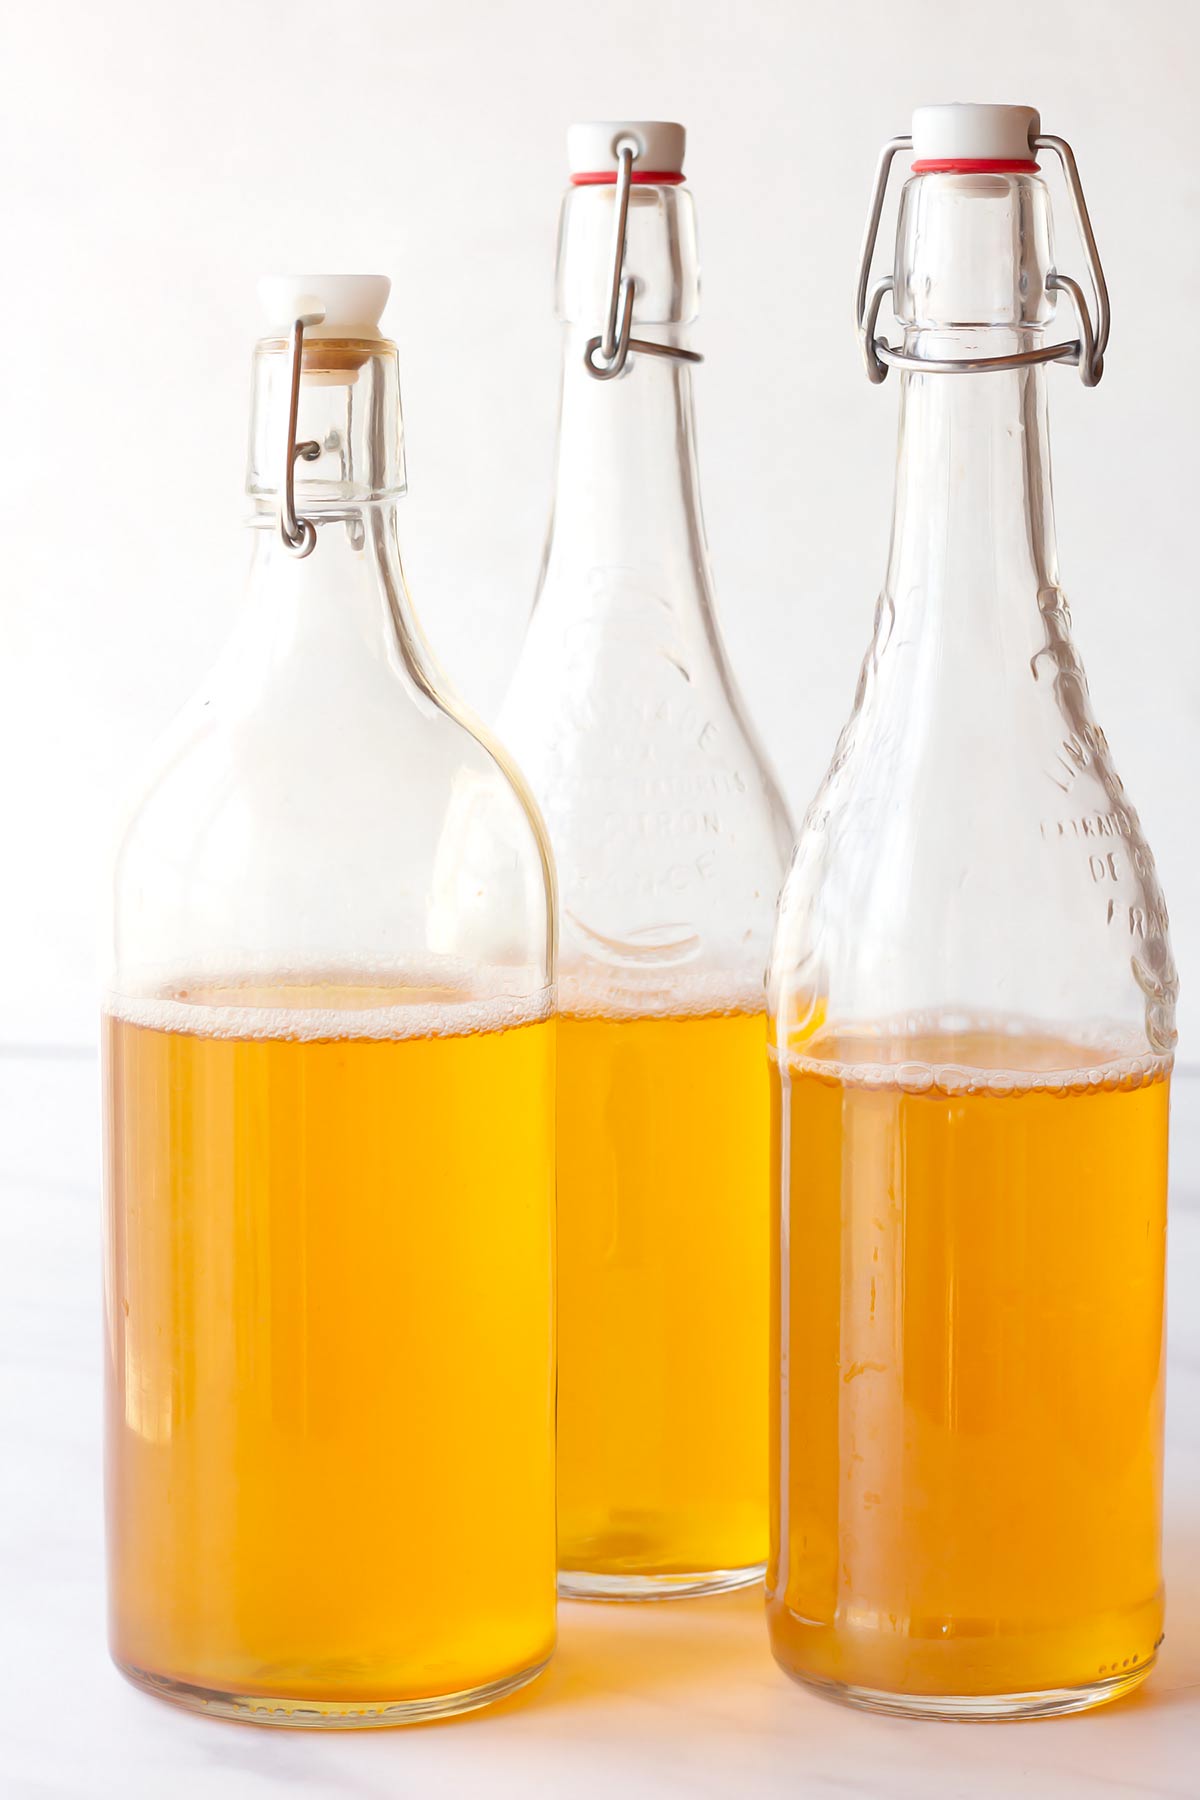 Brewed kombucha filled into 3 flip top glass bottles